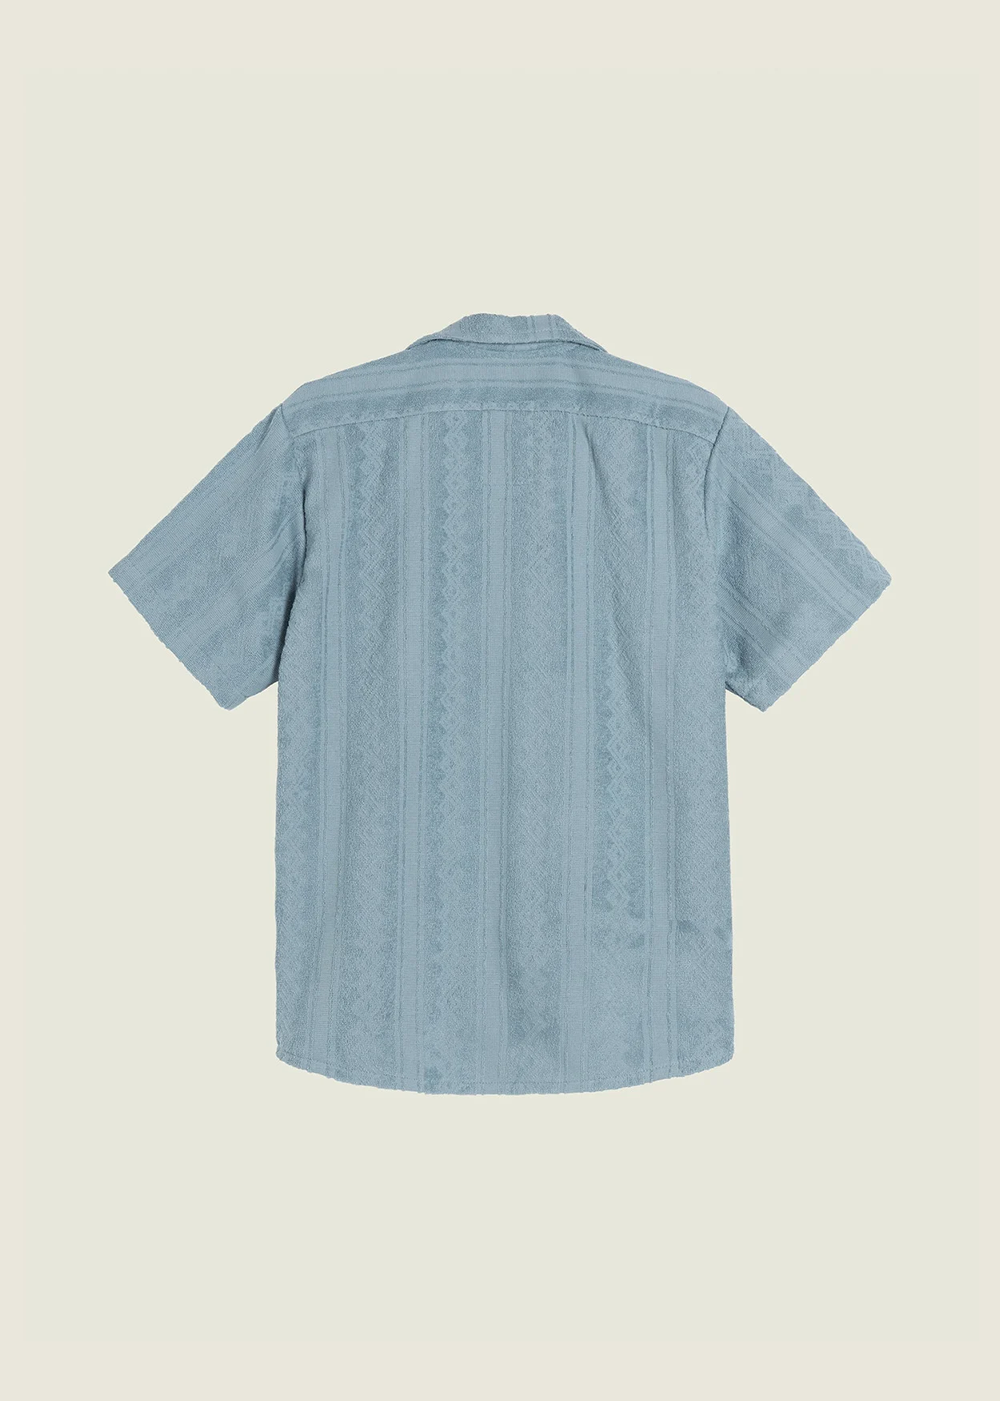 Ancora Cuba Terry Shirt - OAS Company - Danali